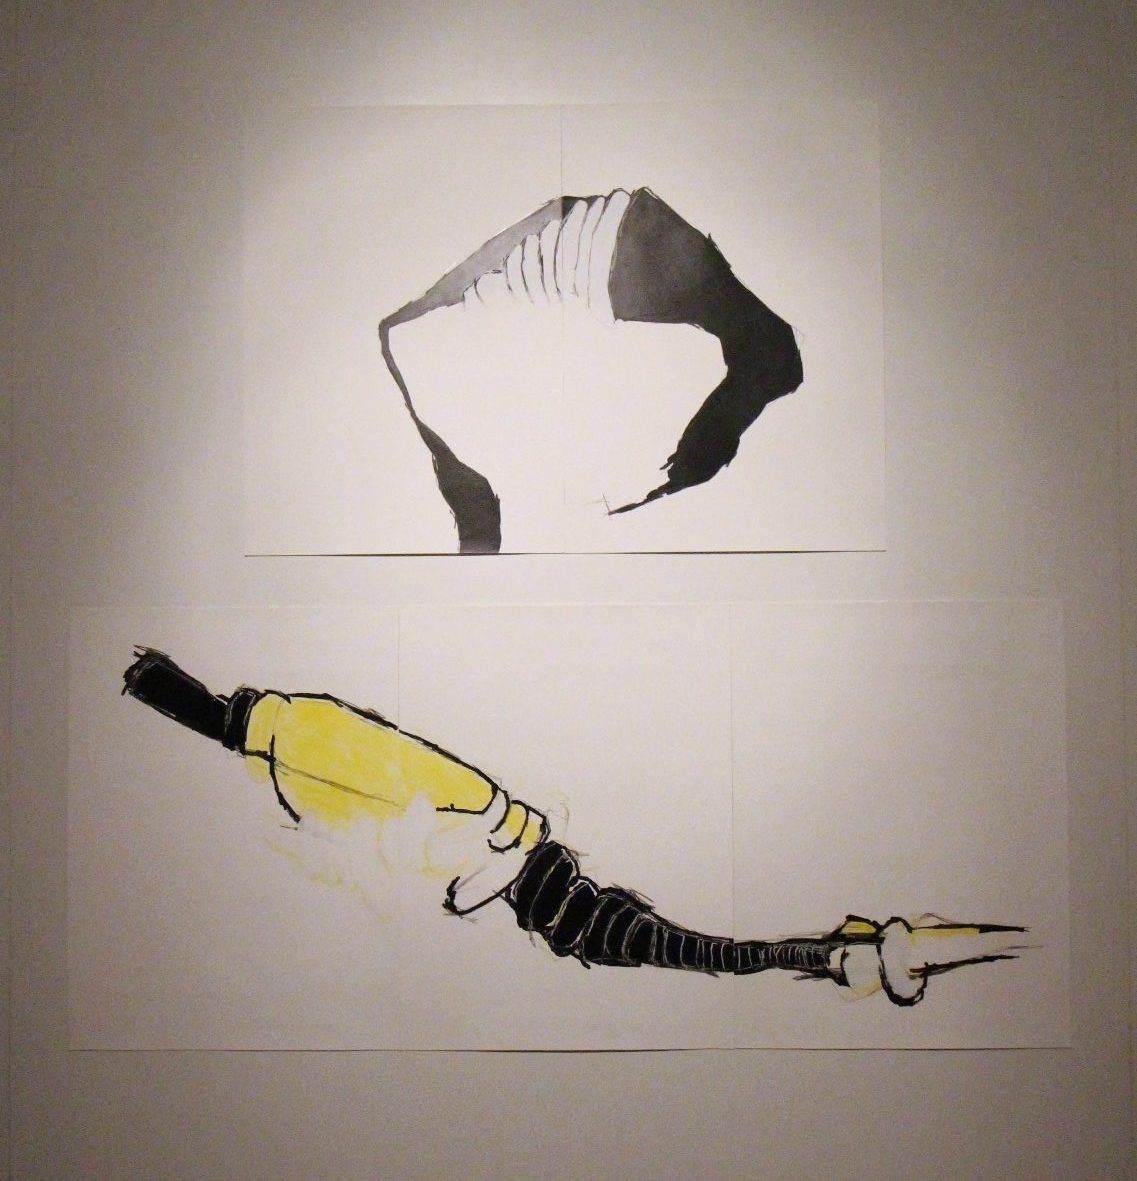 Sem títulos, 1998. Grafite, crayon, acrílica e carbono amarelo sobre papel.